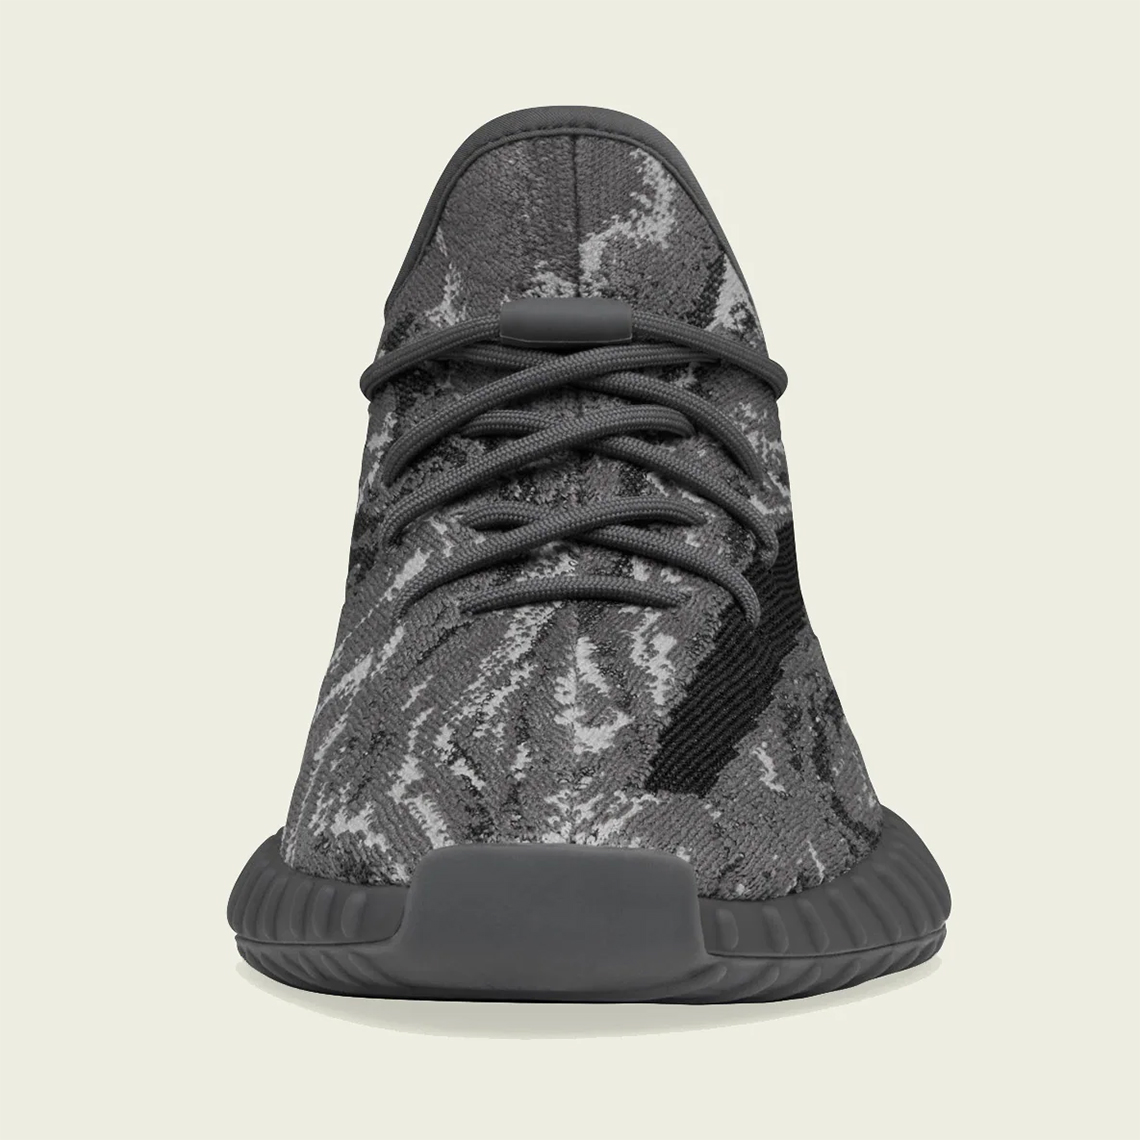 Adidas Yeezy Boost 350 V2 Dark Salt Id4811 Store List 2